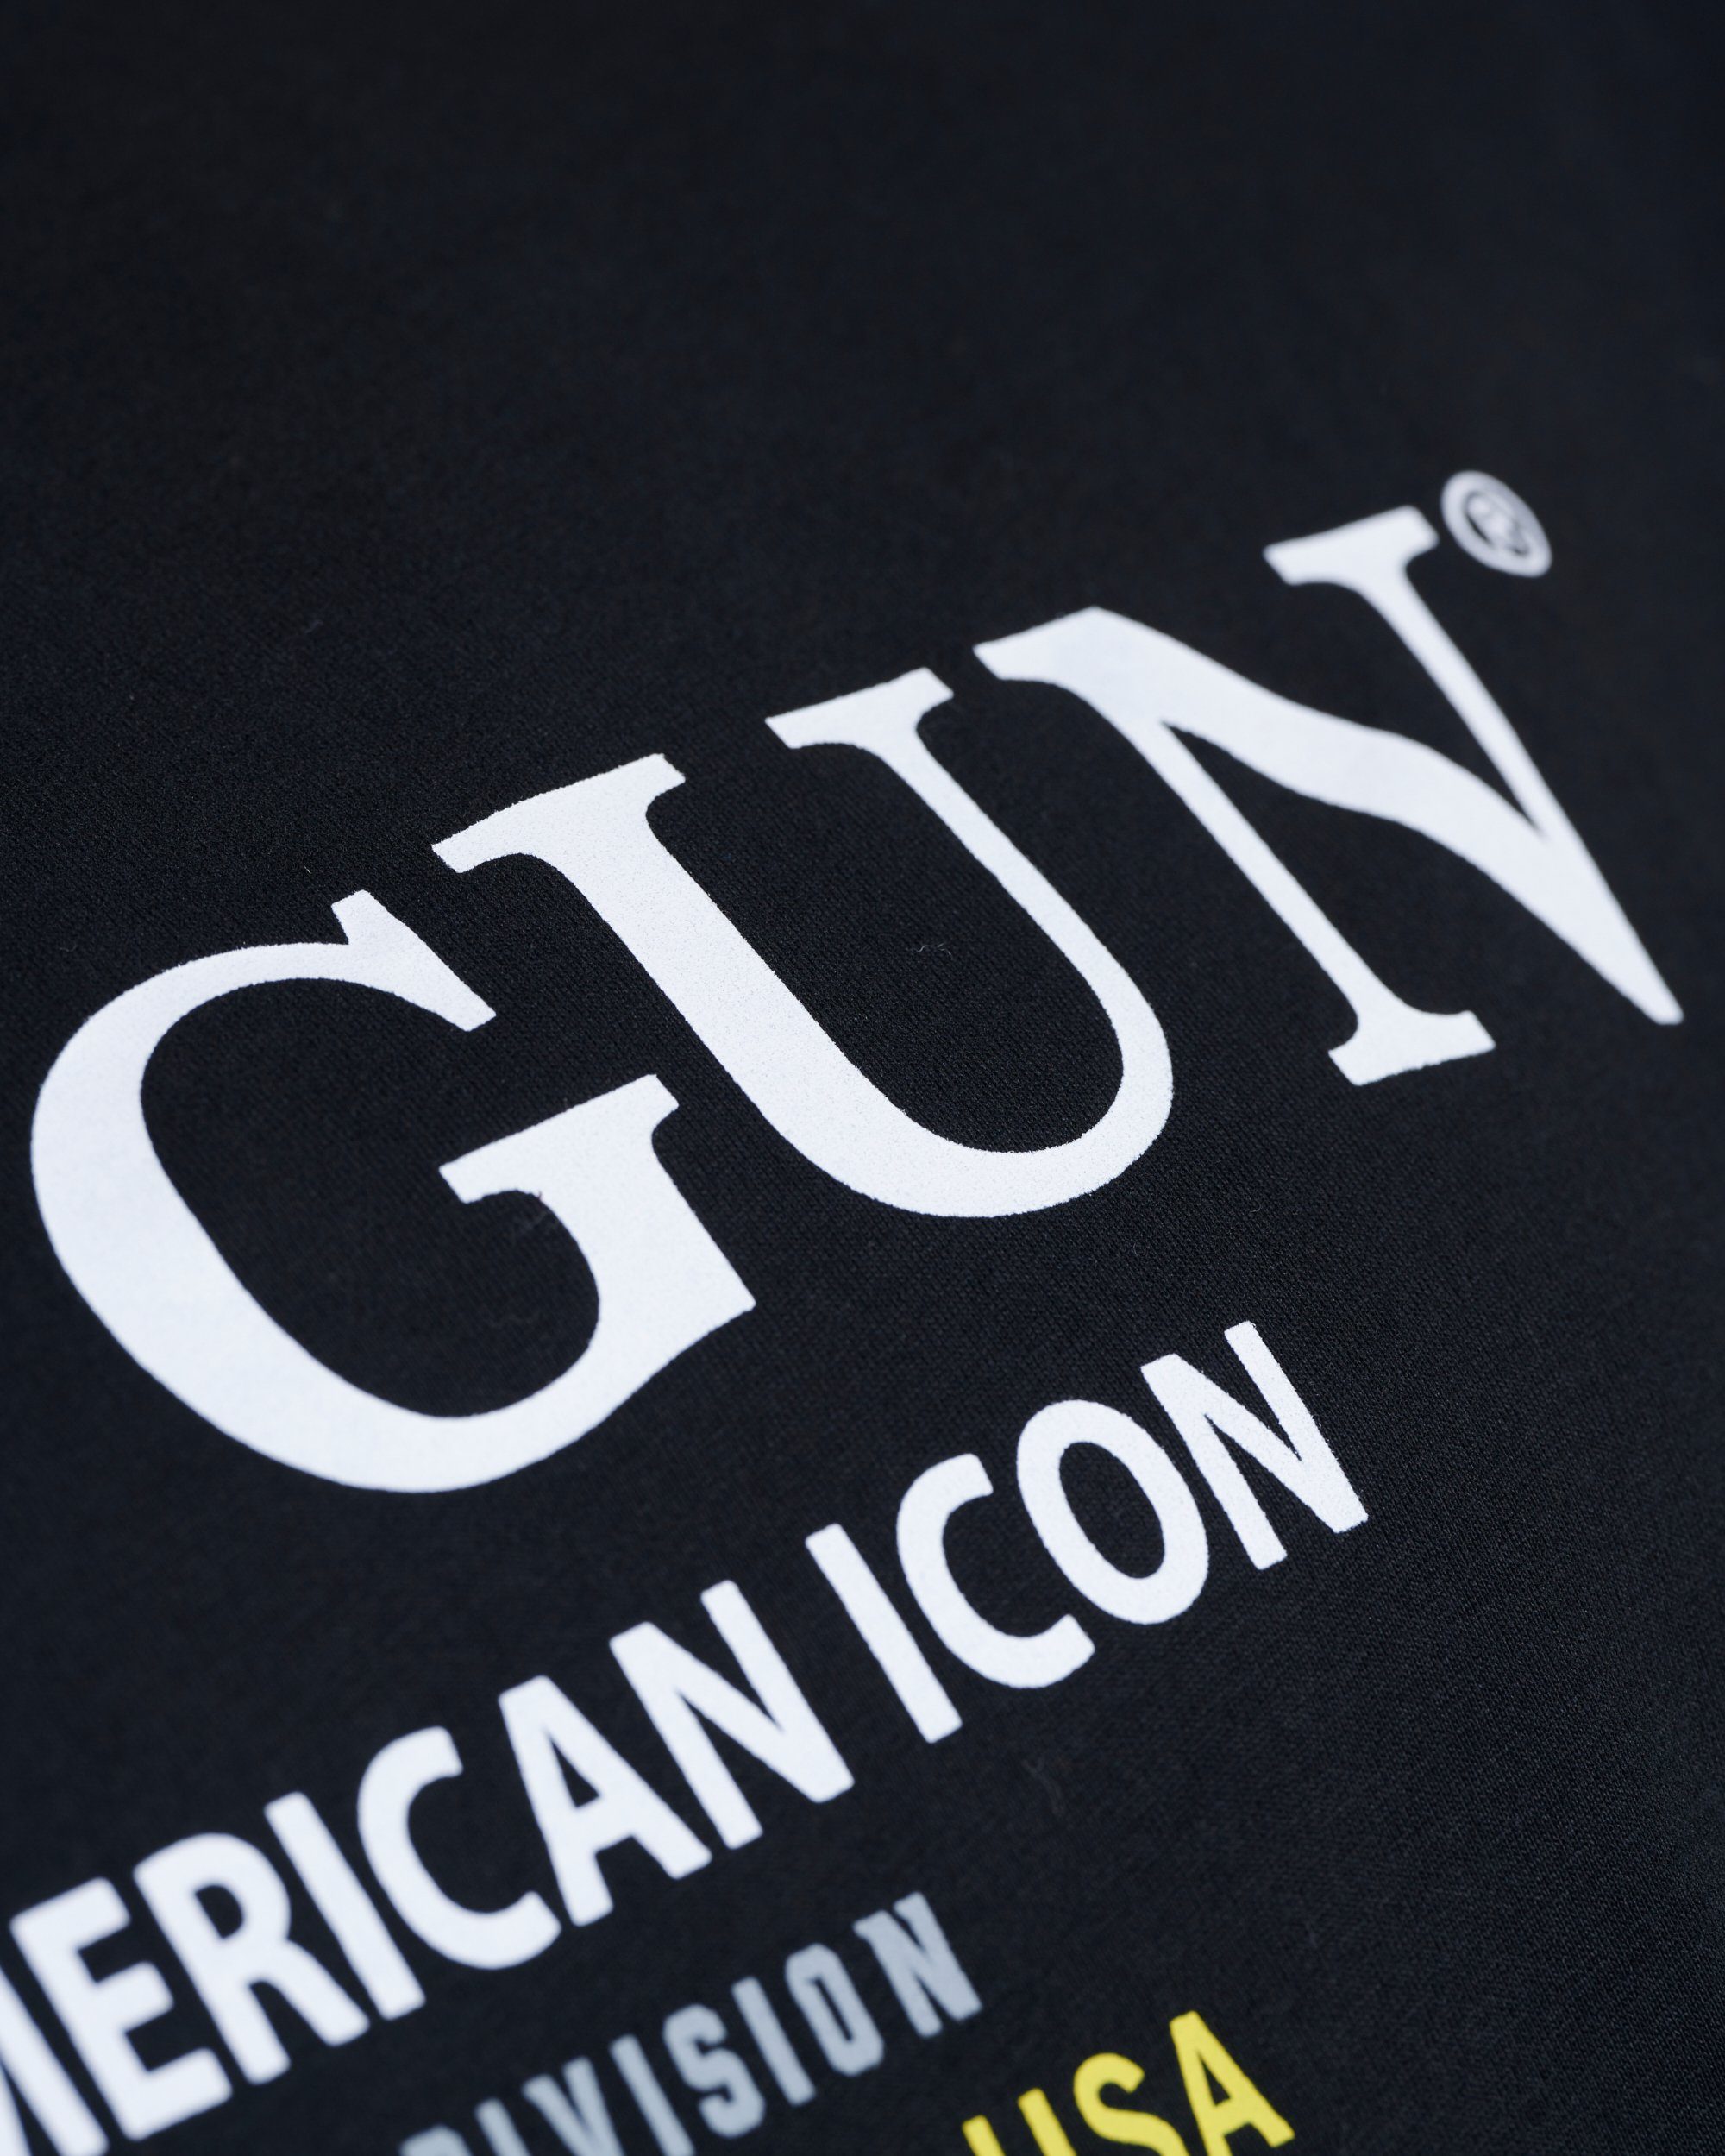 black TOP T-Shirt TG20213002 GUN